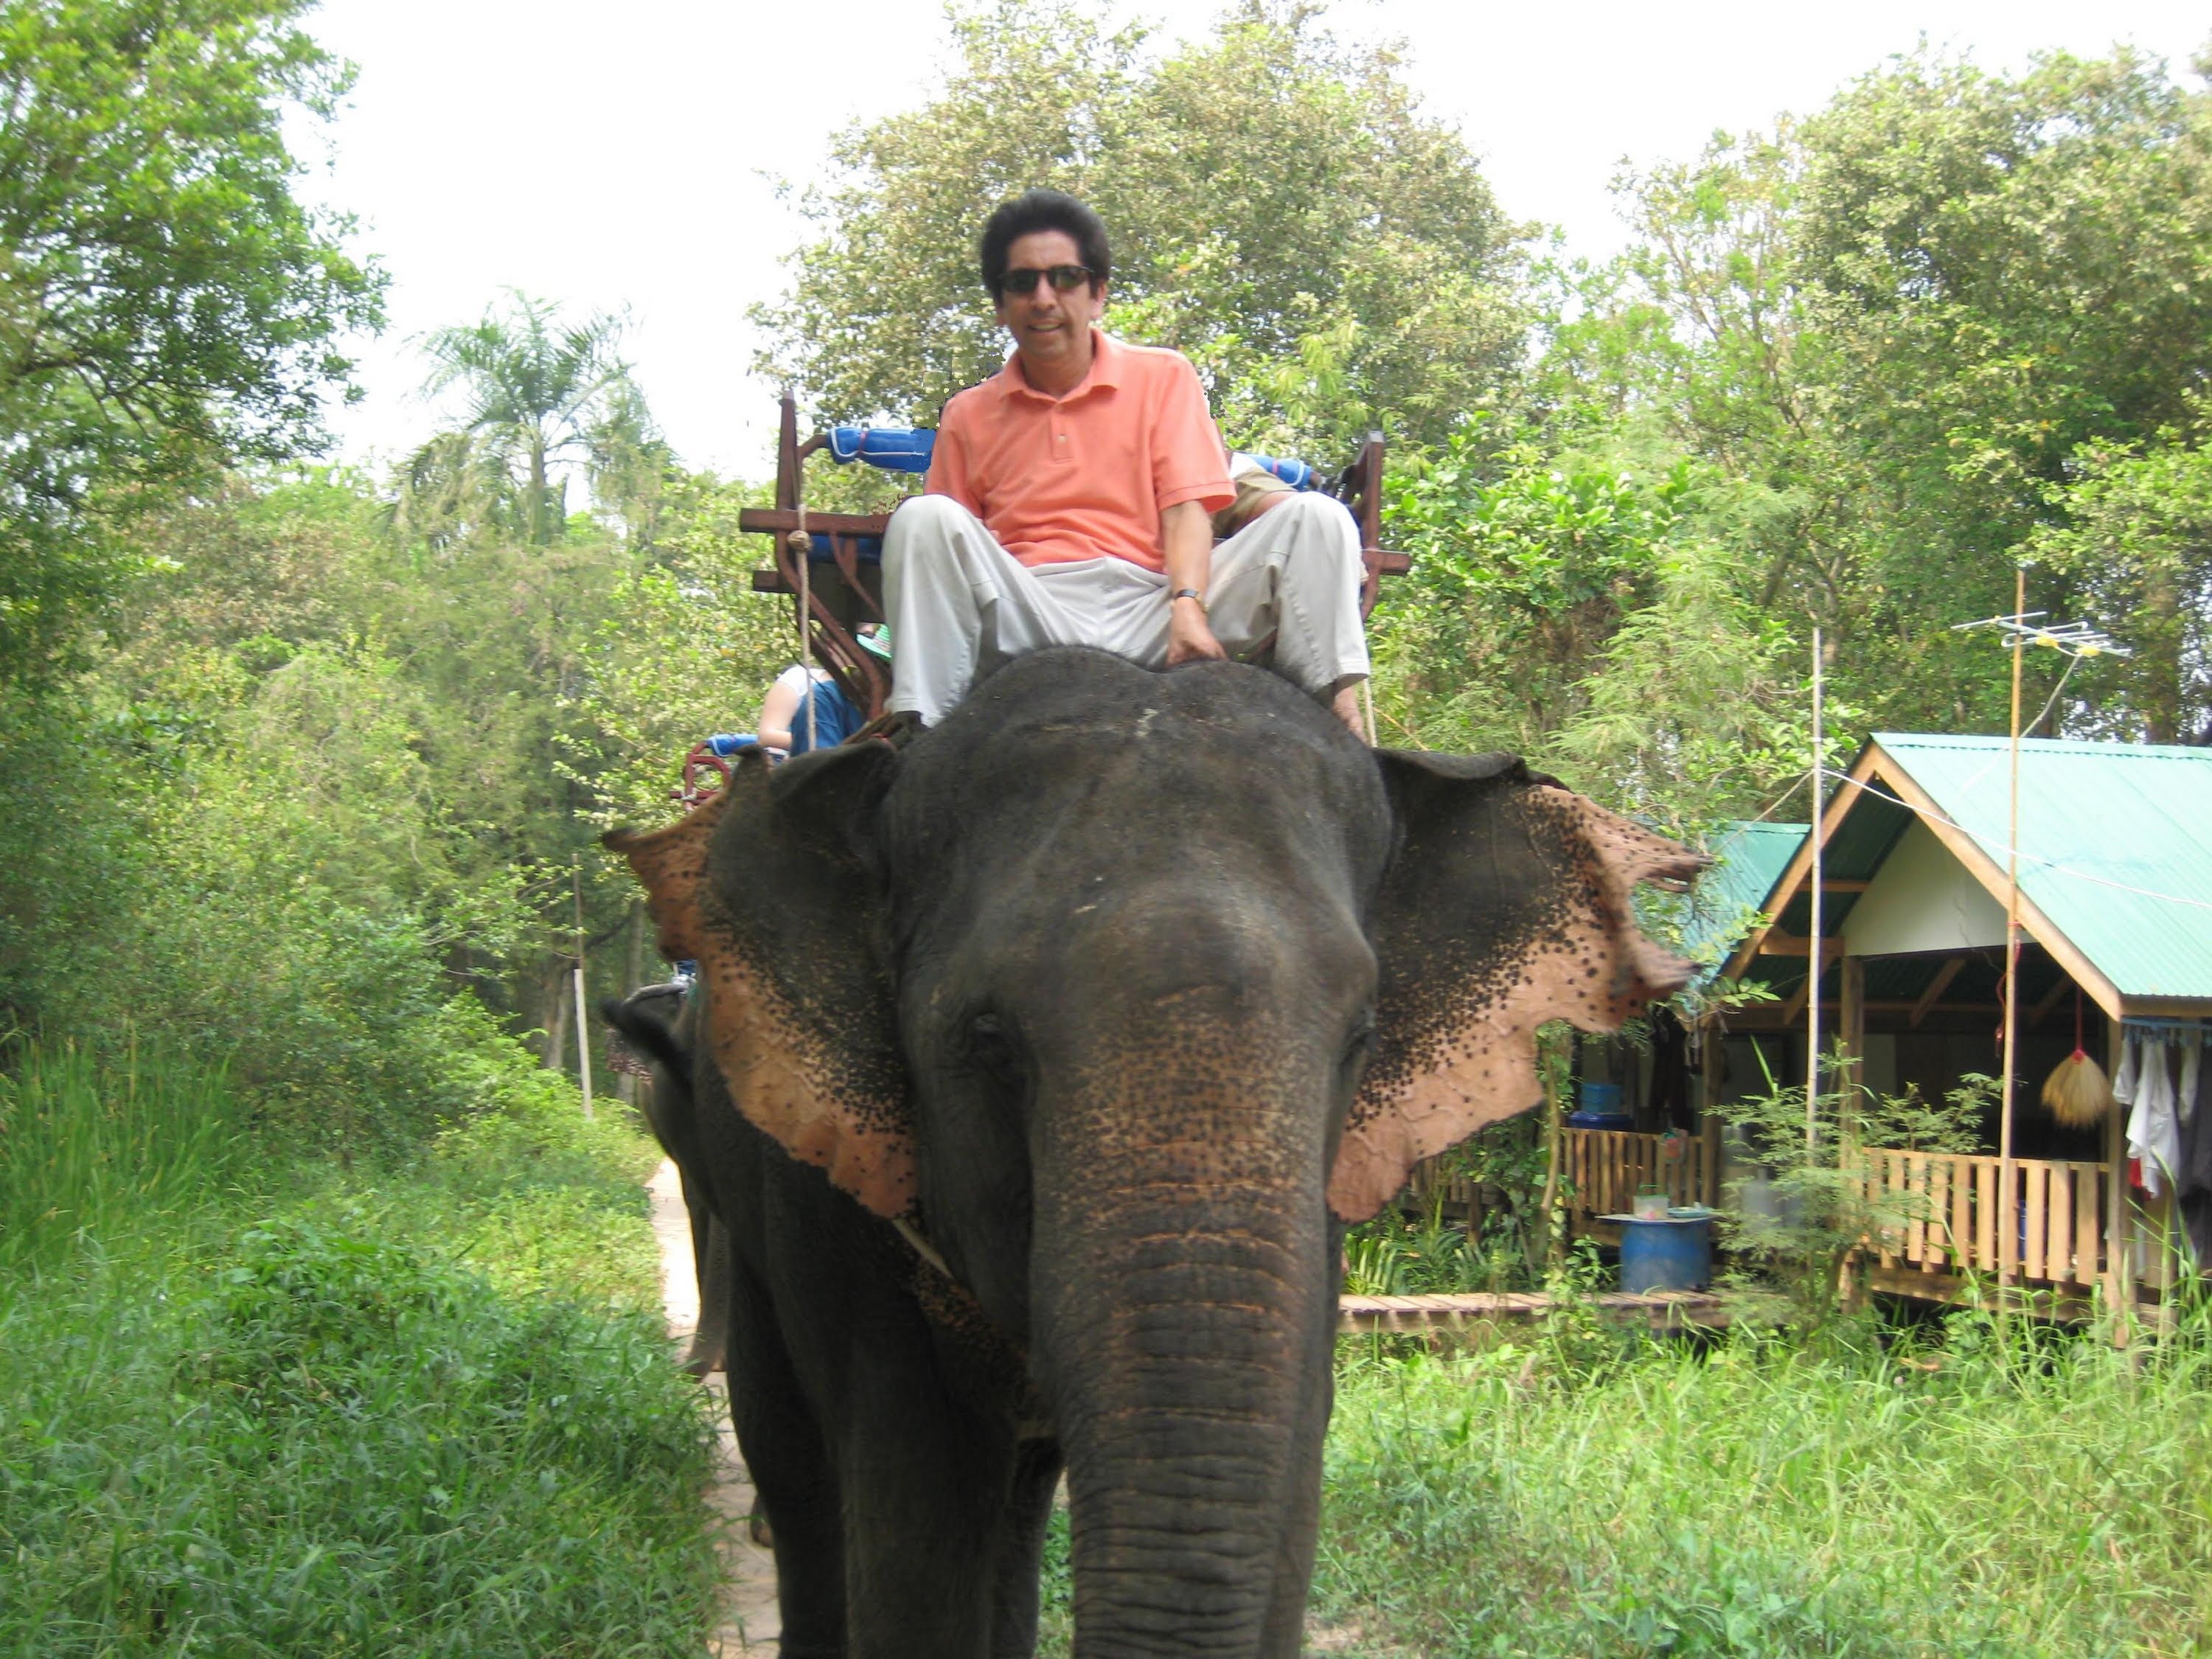 Thailand Elephant Ride Adventure - YouTube